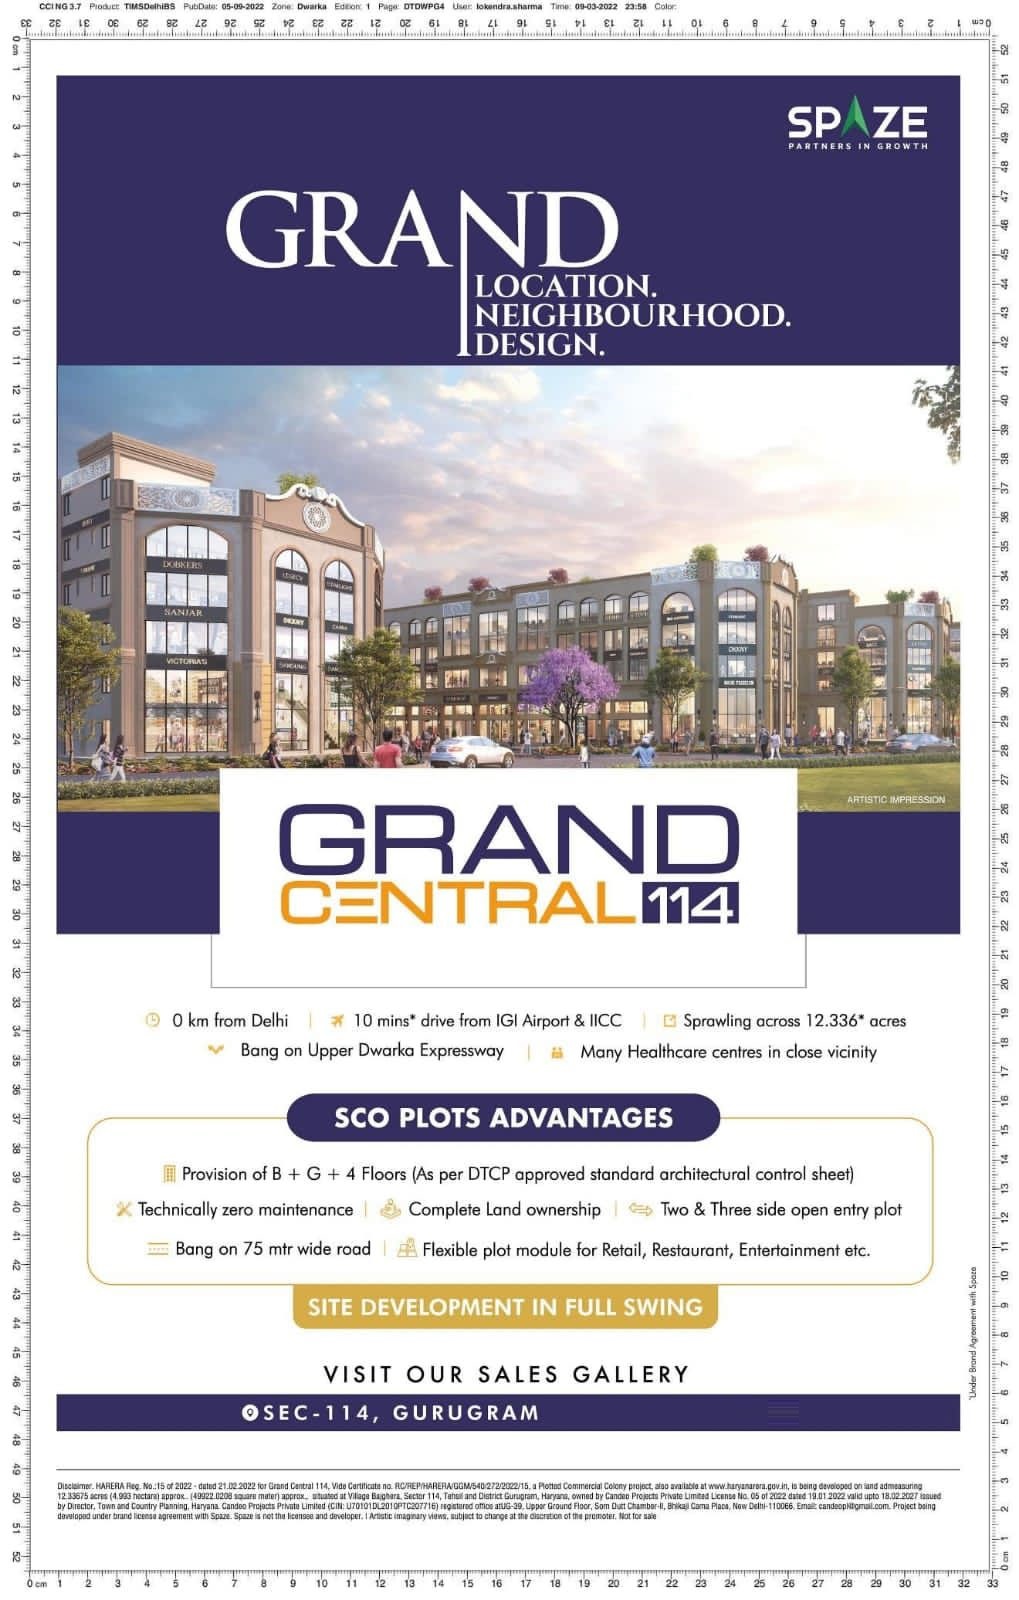 Site development in full swing at Spaze Grand Central 114, Gurgaon Update